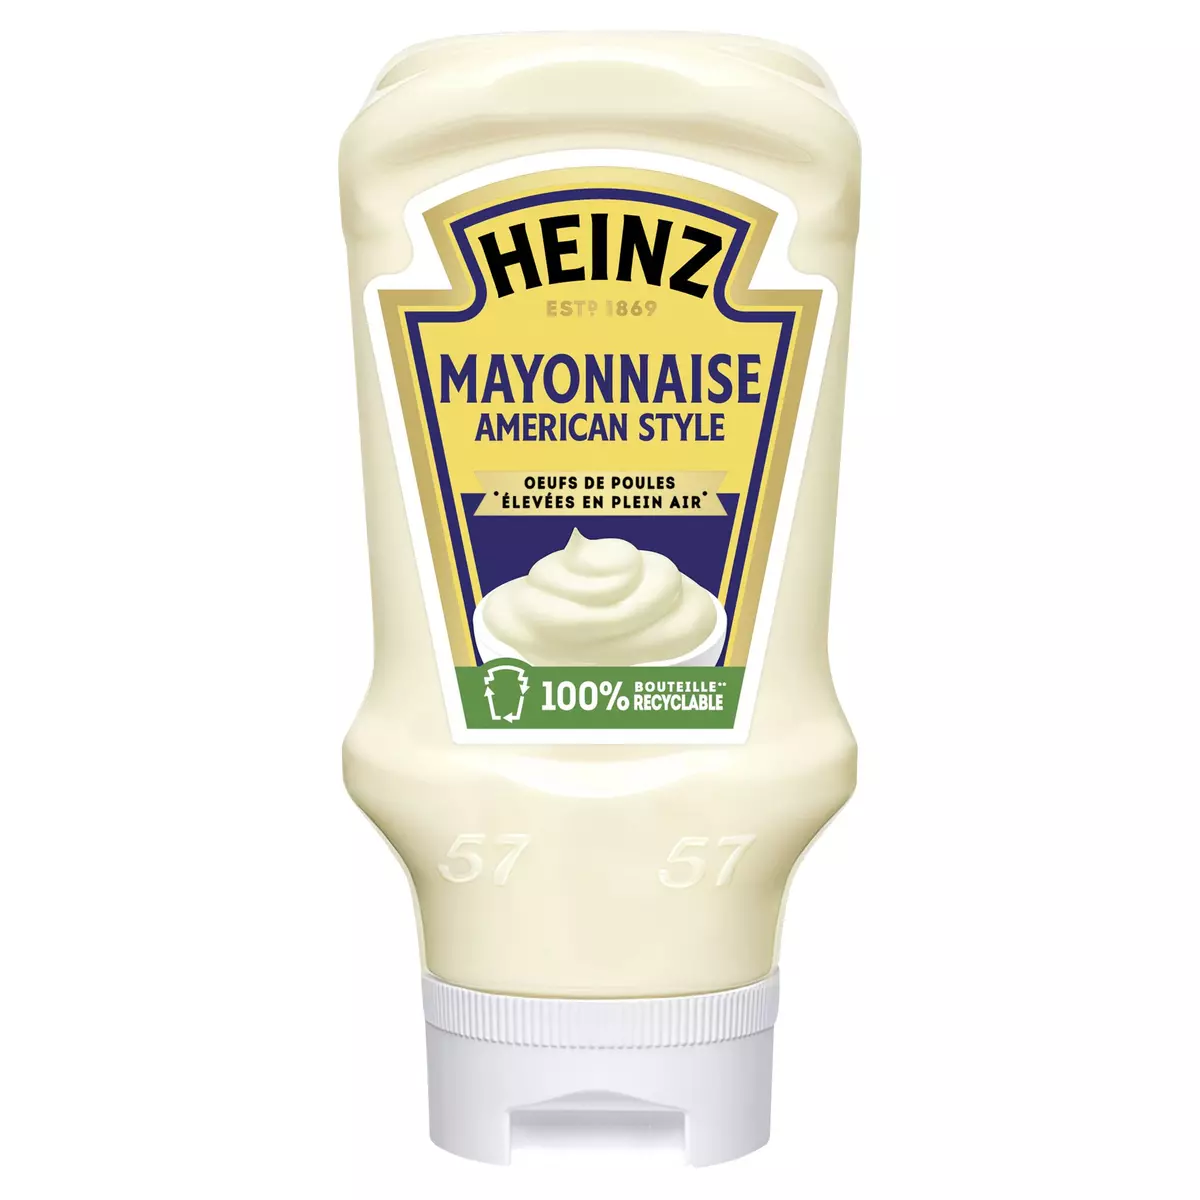 HEINZ Mayonnaise american style flacon souple 395g